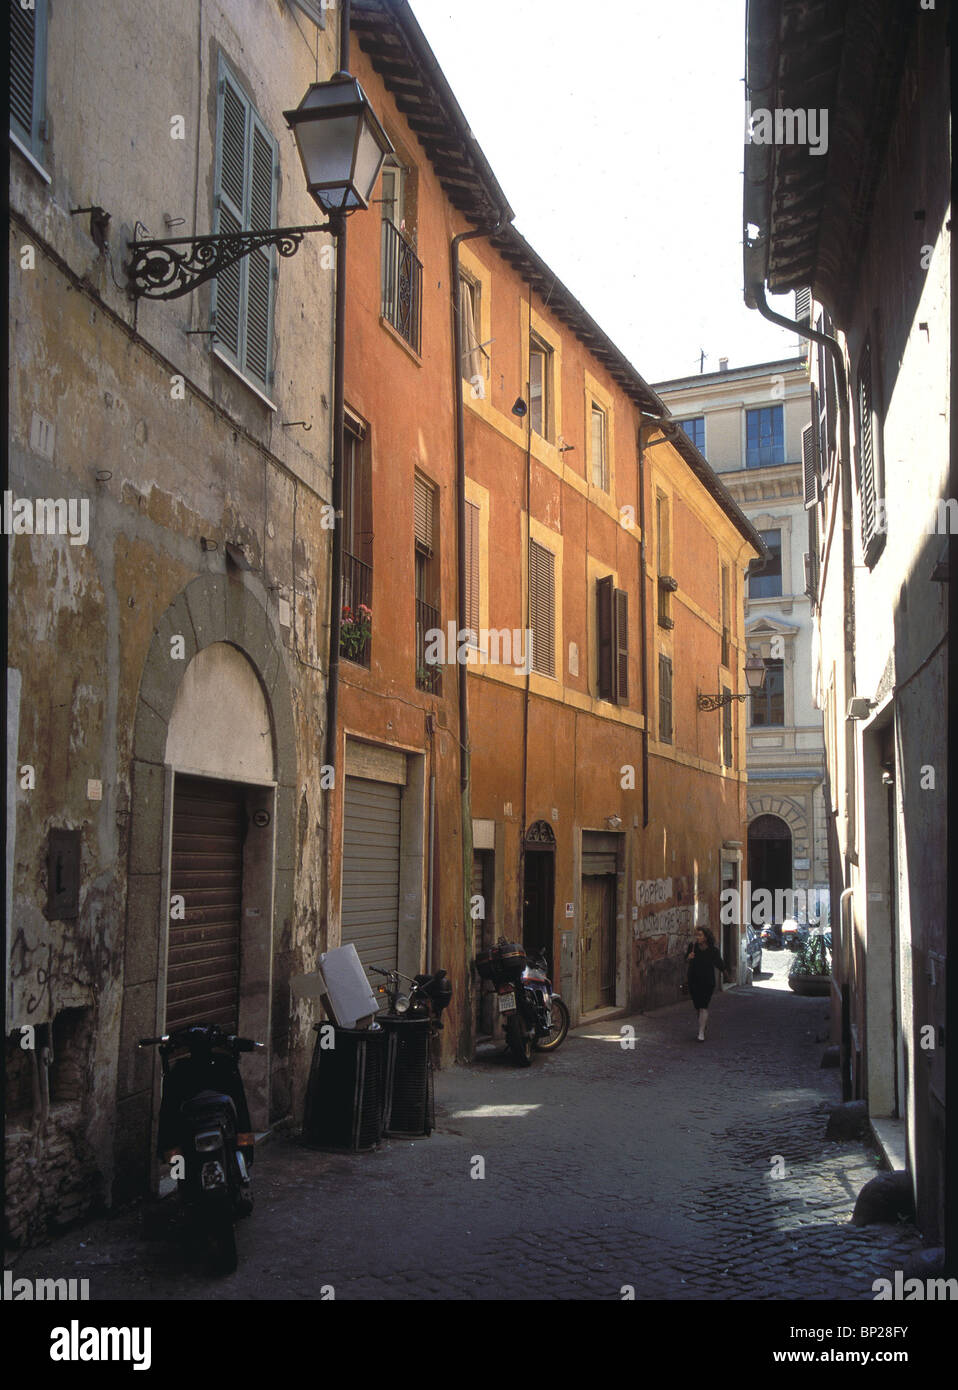 2155. ROMA - STREET IN THE JEWISH GHETTO Stock Photo